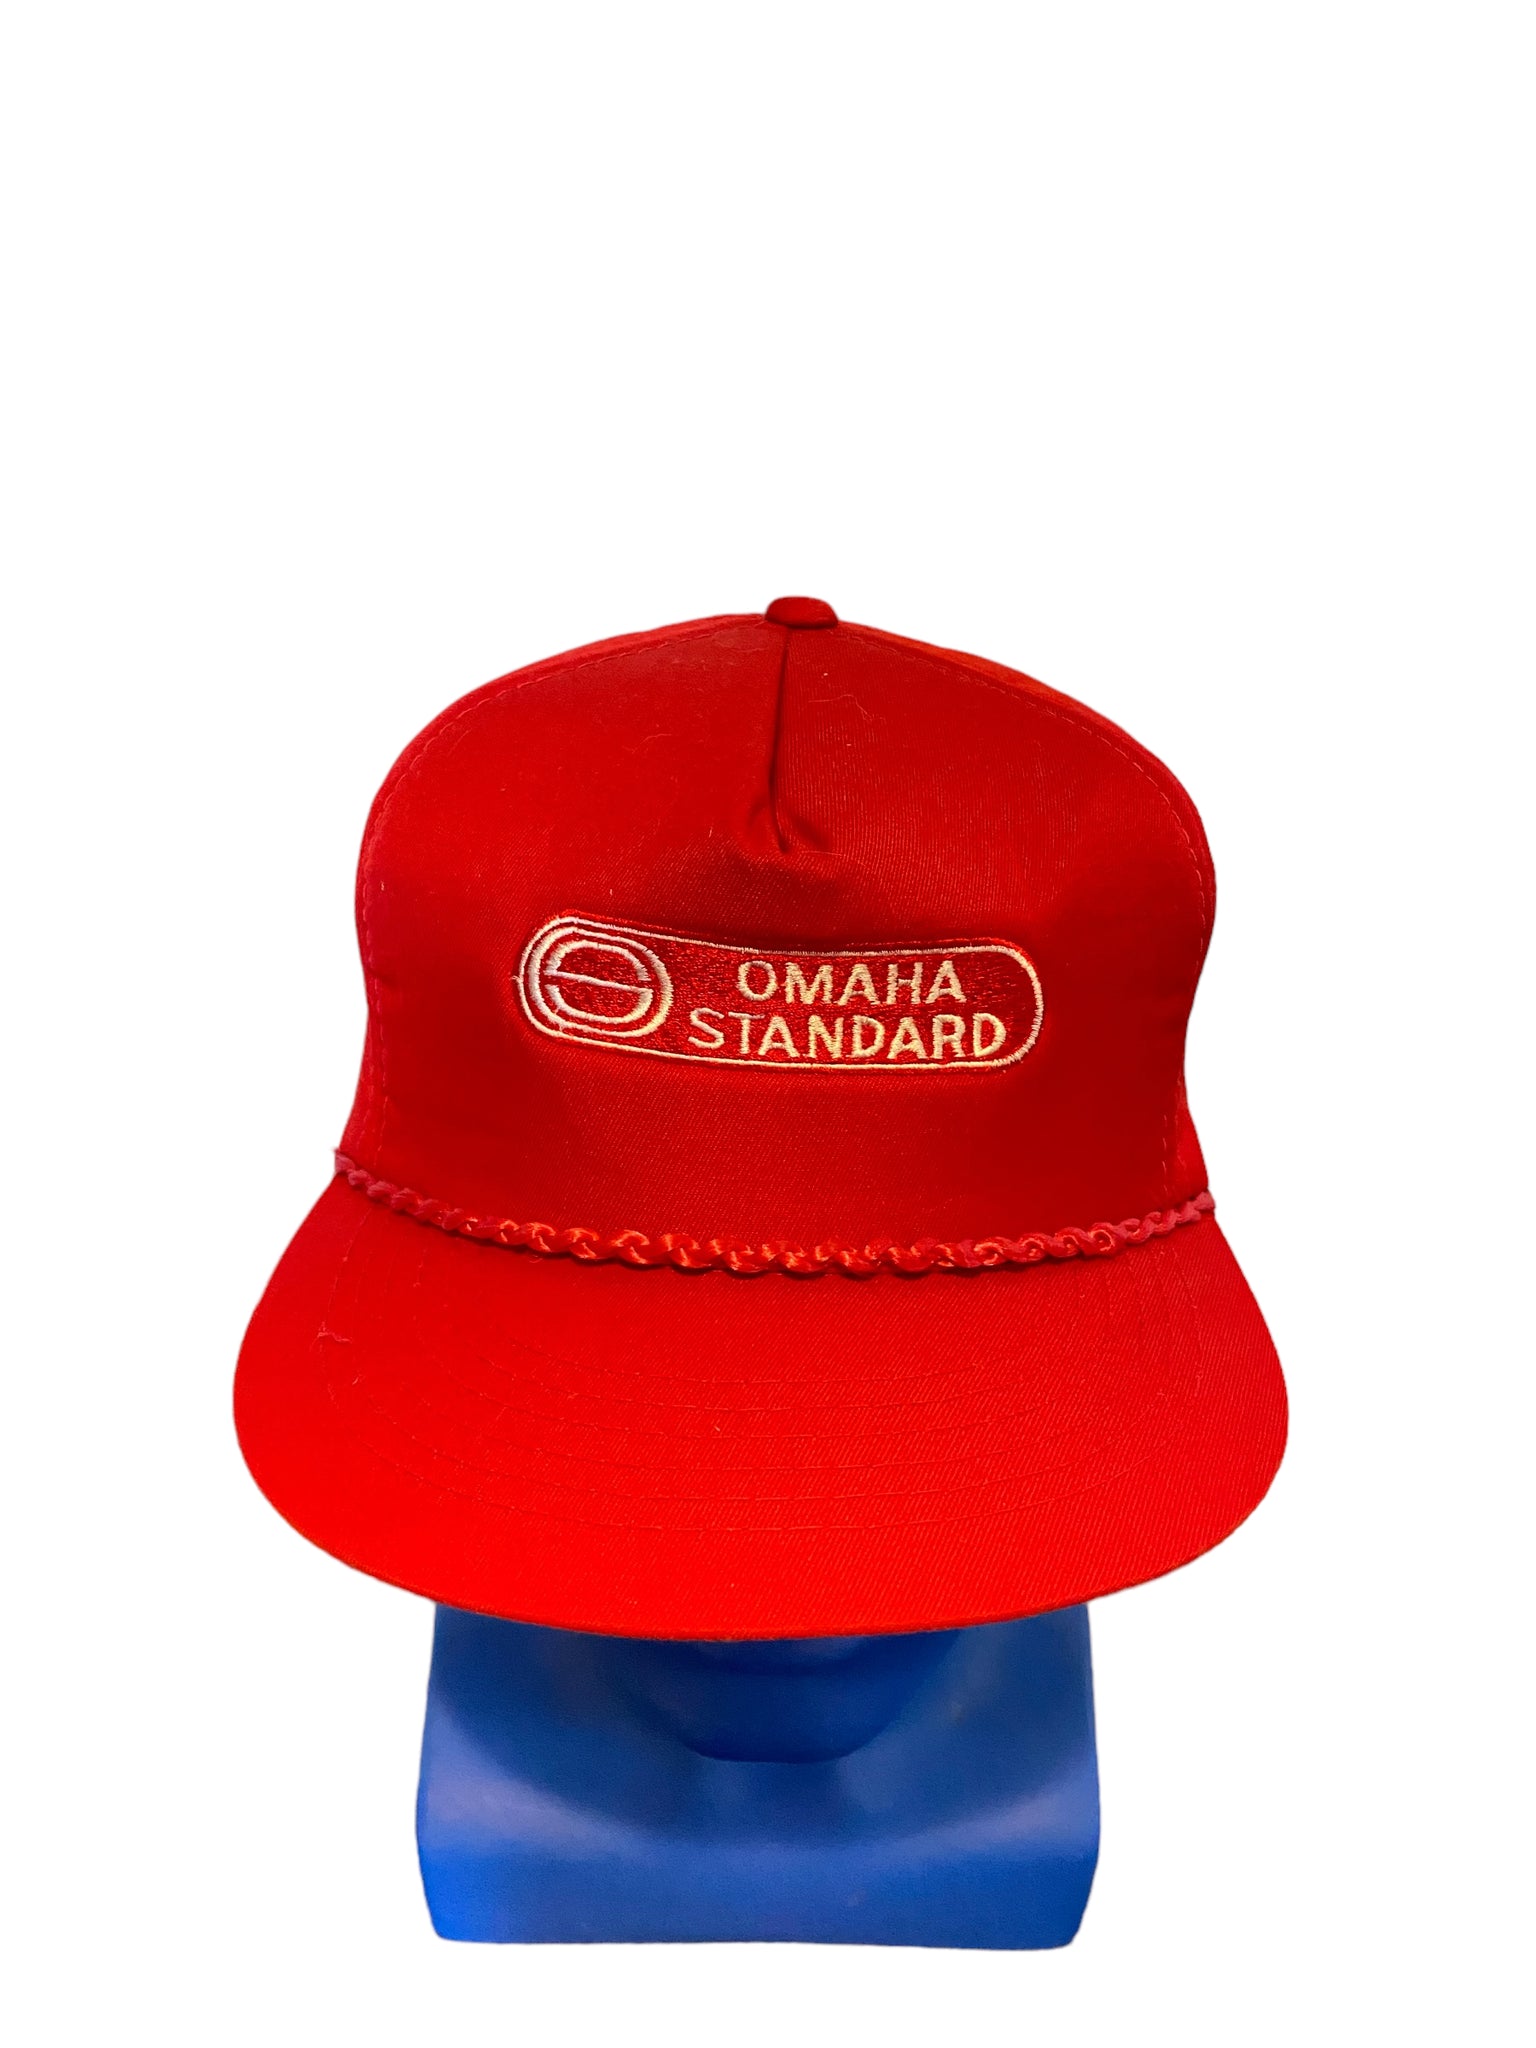 Omaha Standard Snapback Hat VTG Foam Front Rope Cap Trucker Adult